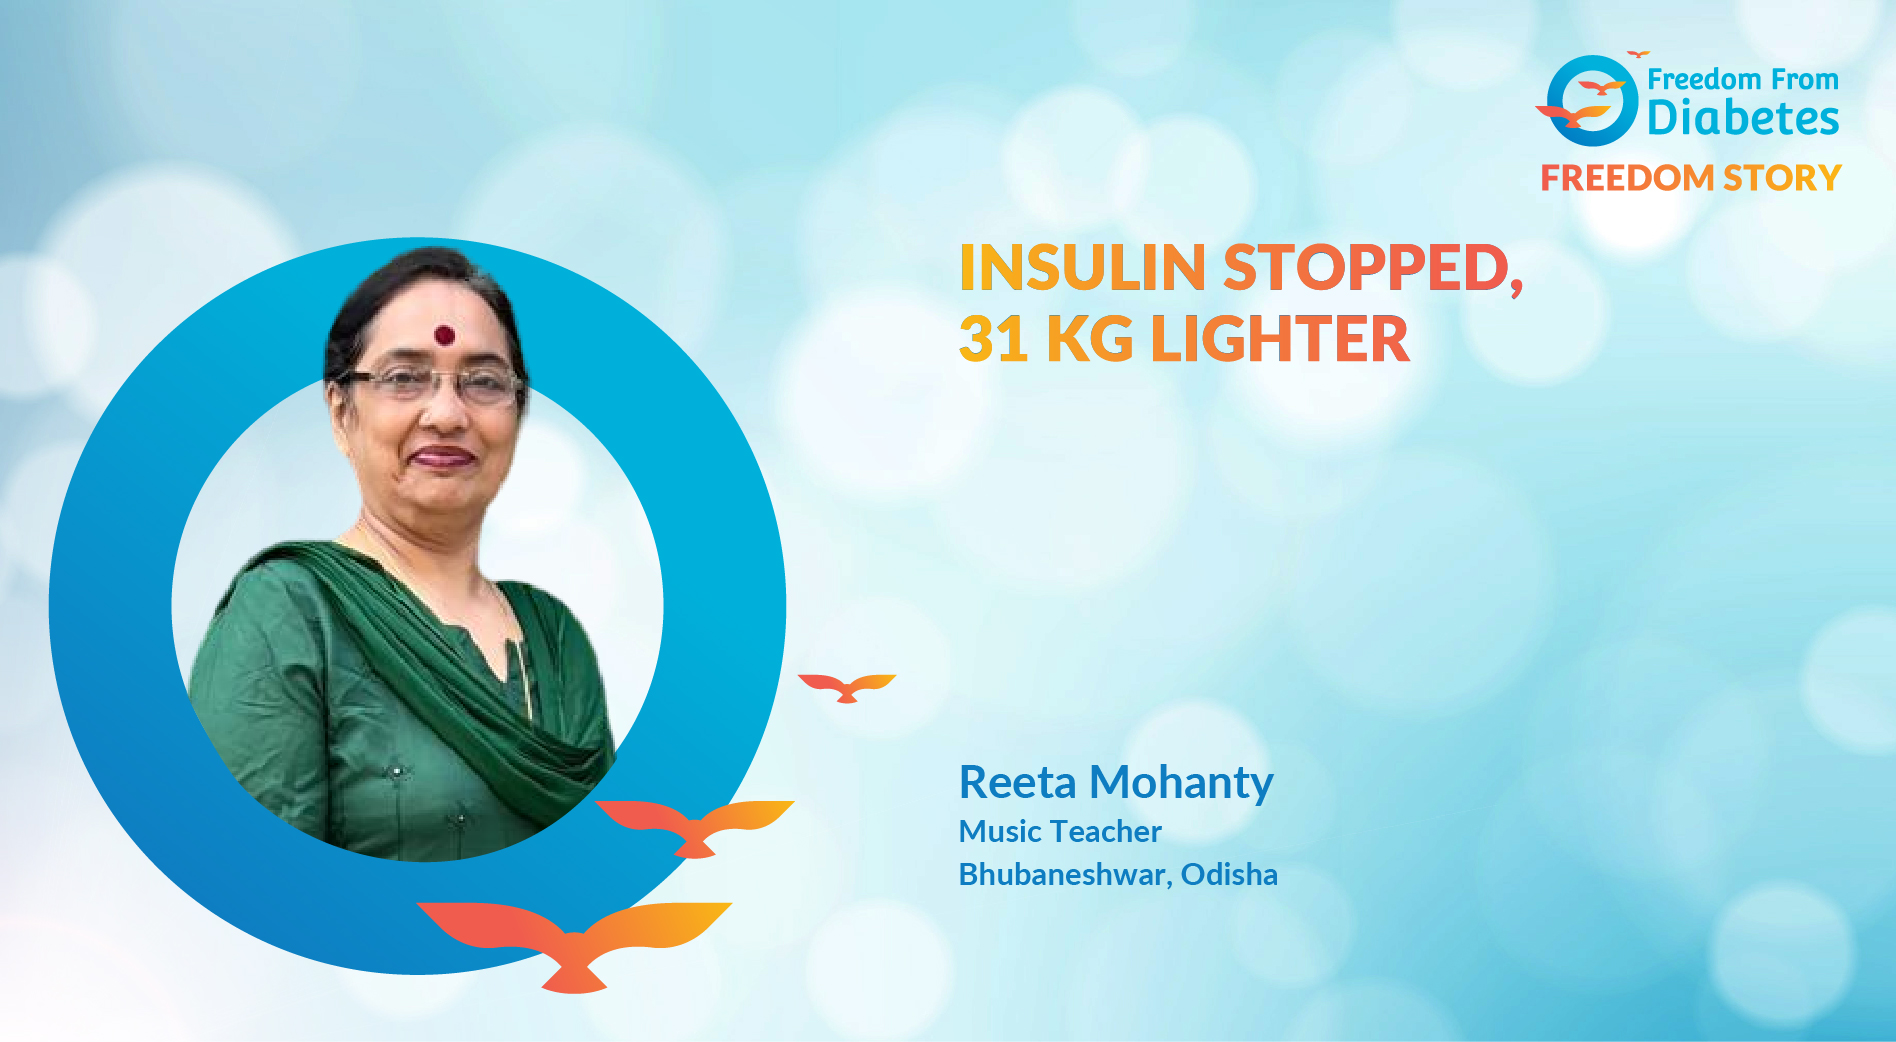 Reeta Mohanty: An incredible story of transformation